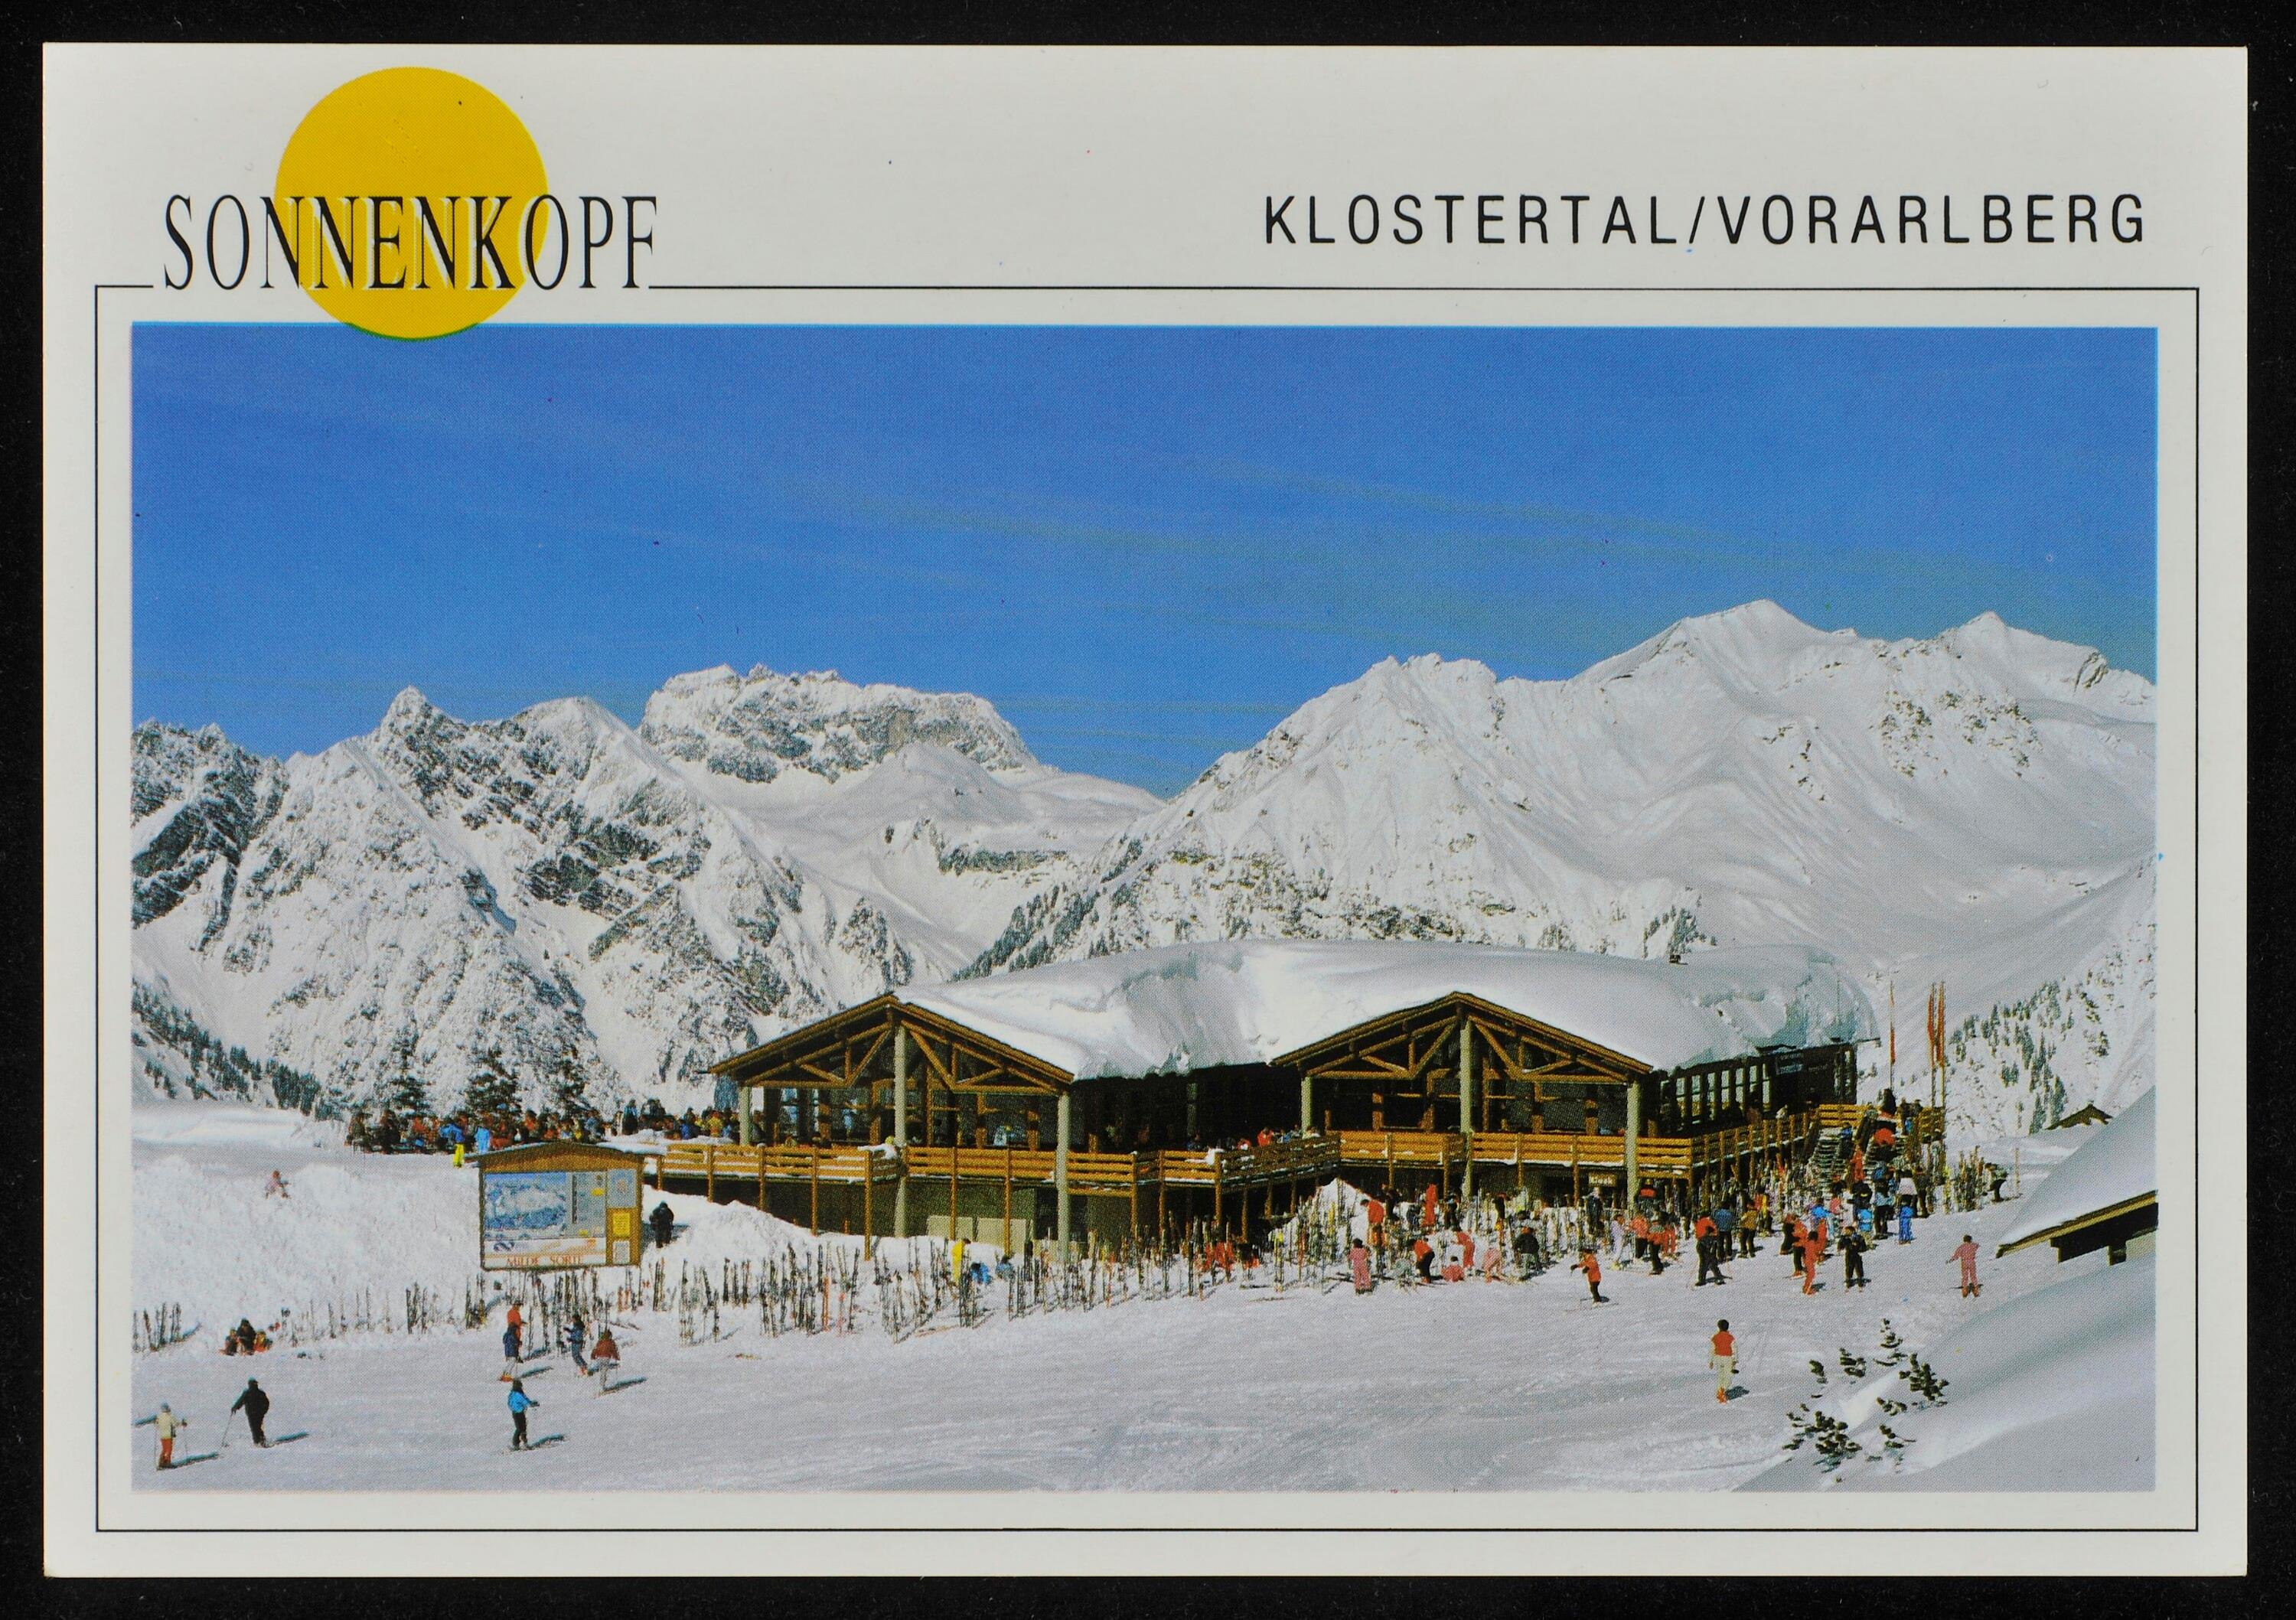 [Klösterle] Sonnenkopf Klostertal/Vorarlberg></div>


    <hr>
    <div class=